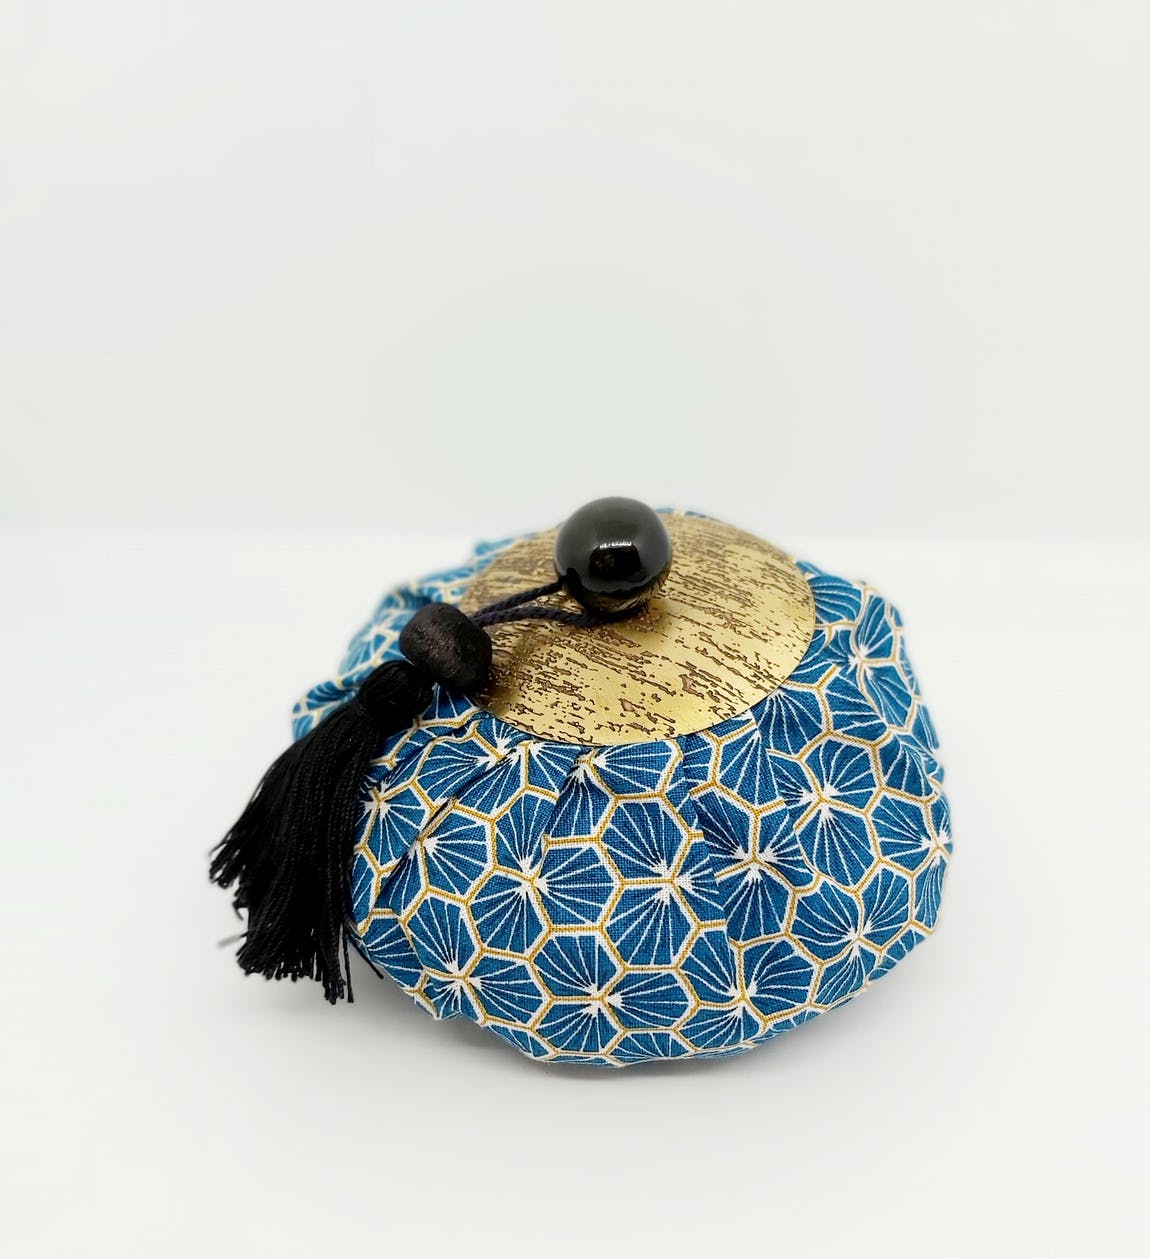 Aumônière (scented purse) “Japan blue” - Natalia Willmott